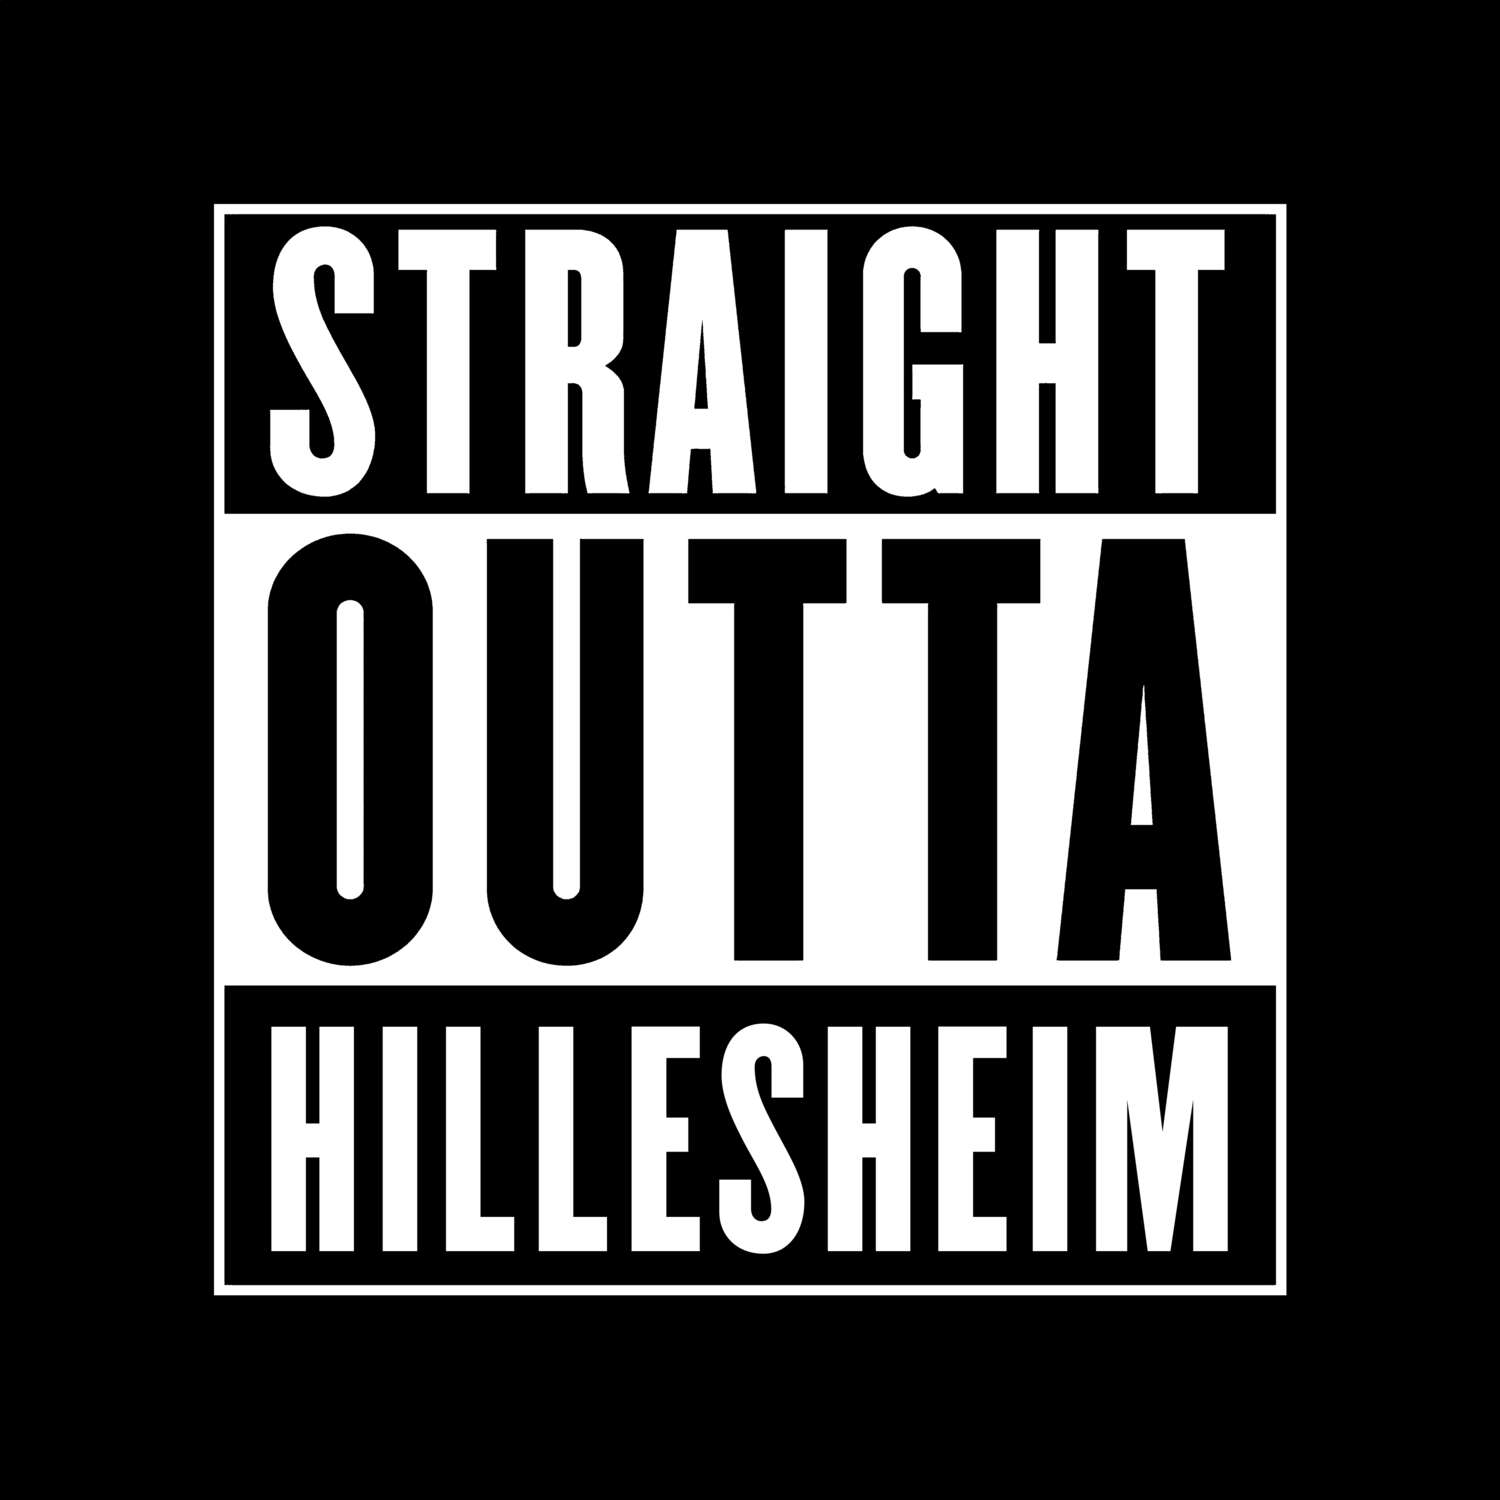 Hillesheim T-Shirt »Straight Outta«